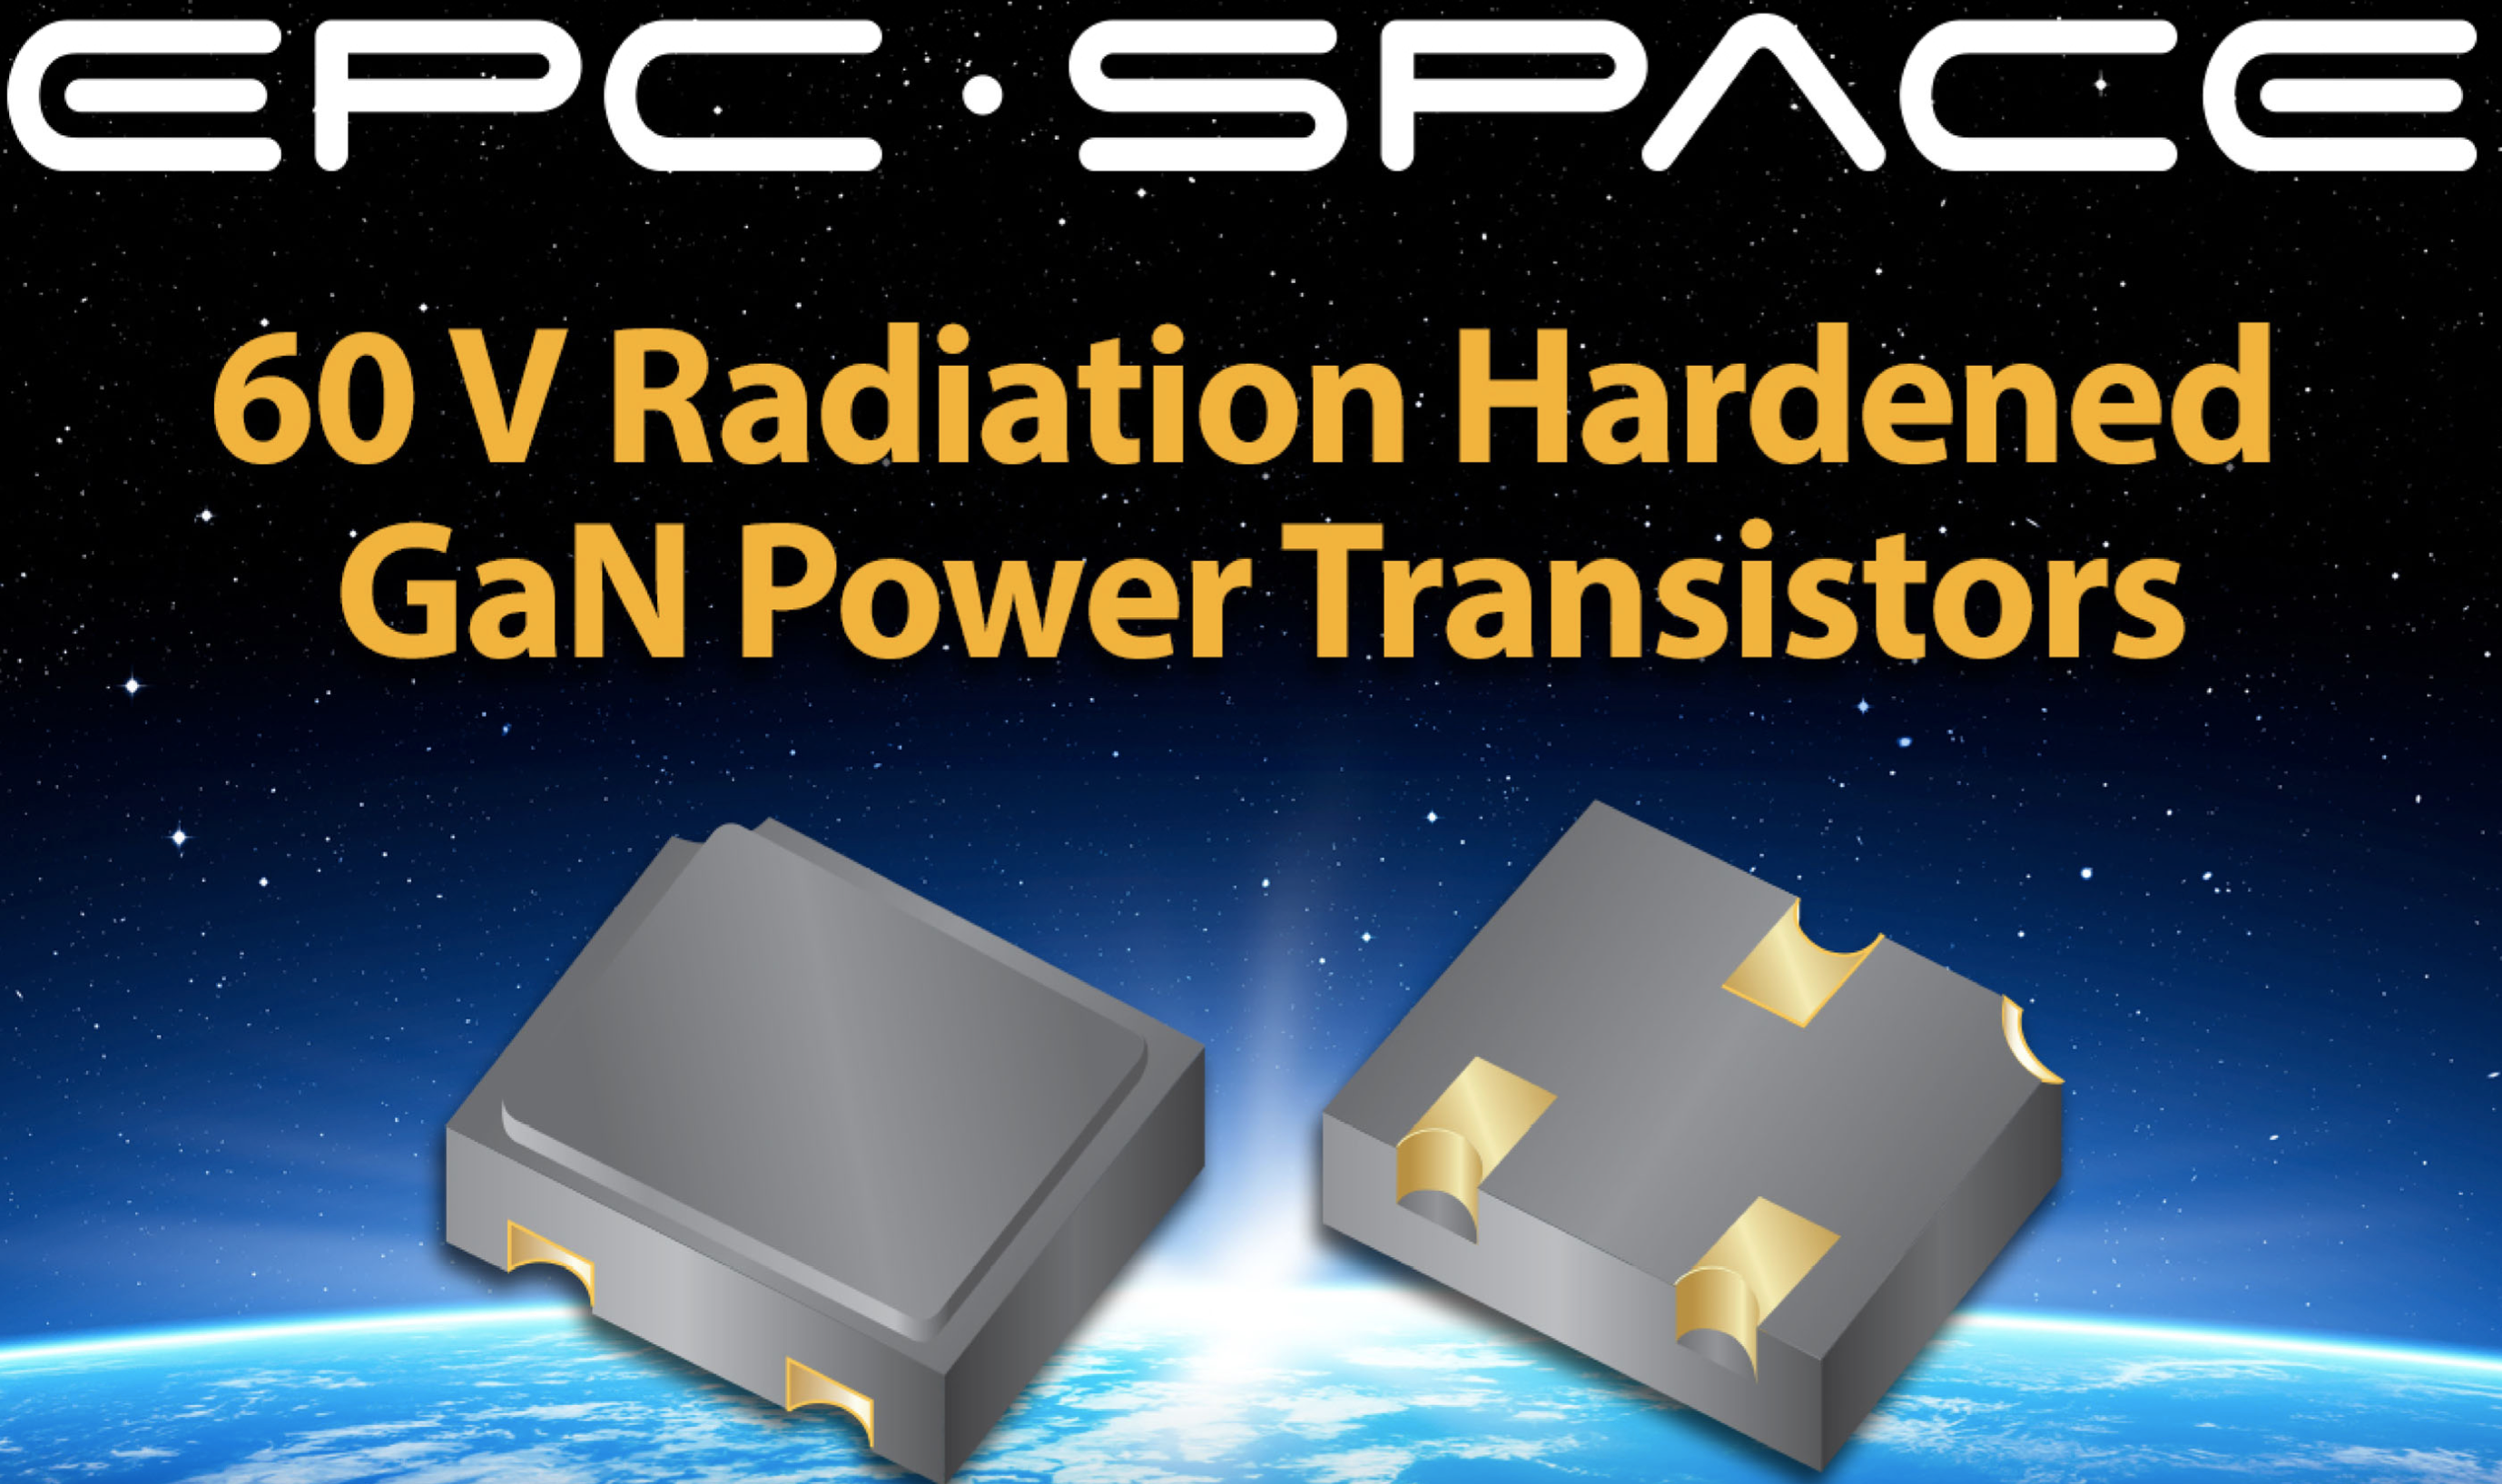 60 V Rad Hard GaN Power Device for Demanding Space Applications